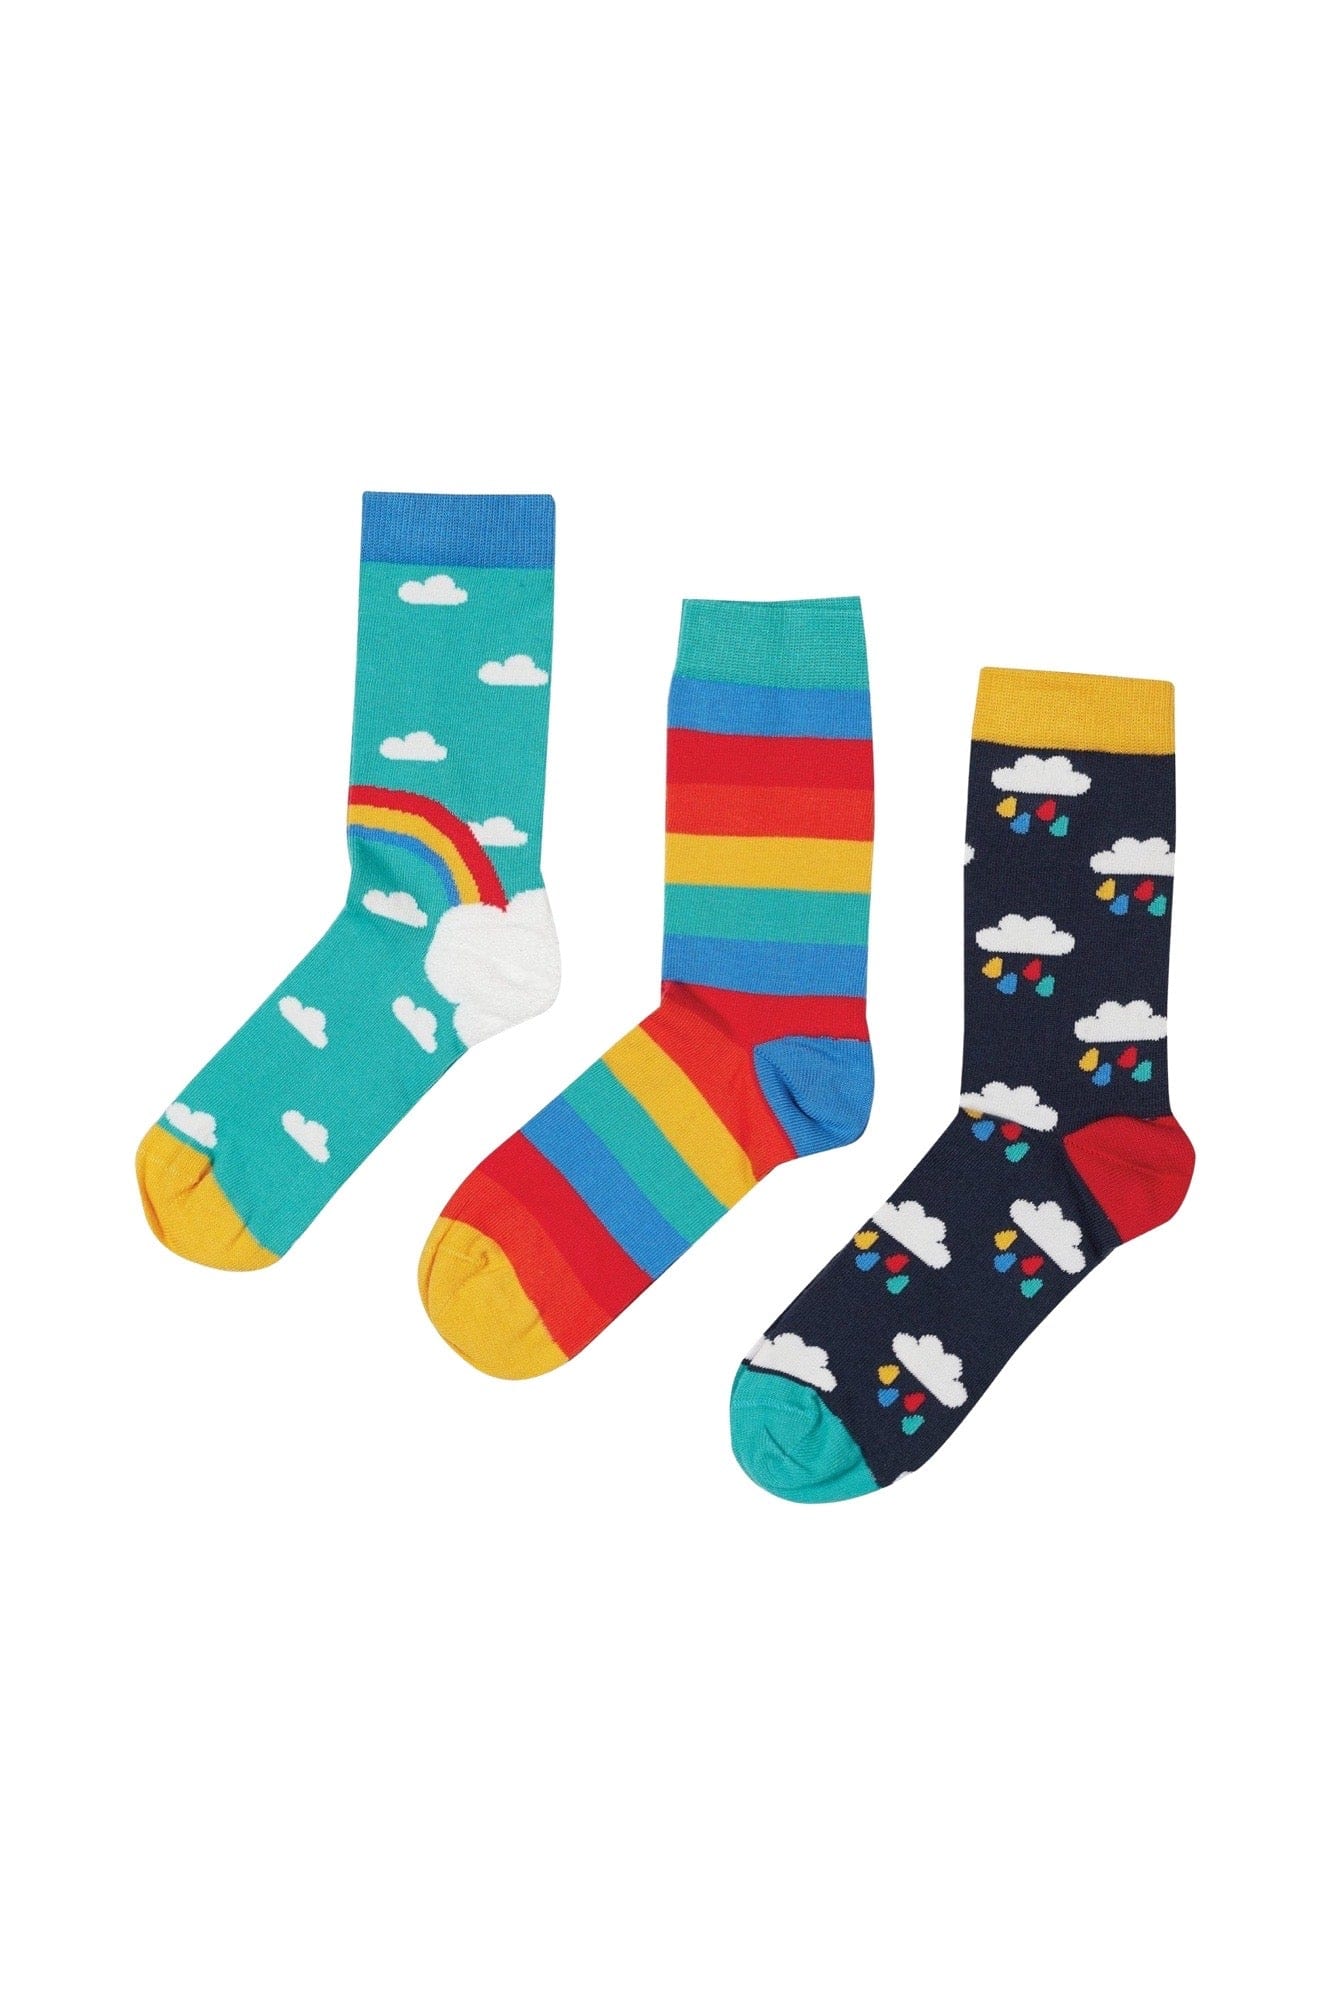 Rock My Socks Pacific Aqua/Rainbow - 3 Pack